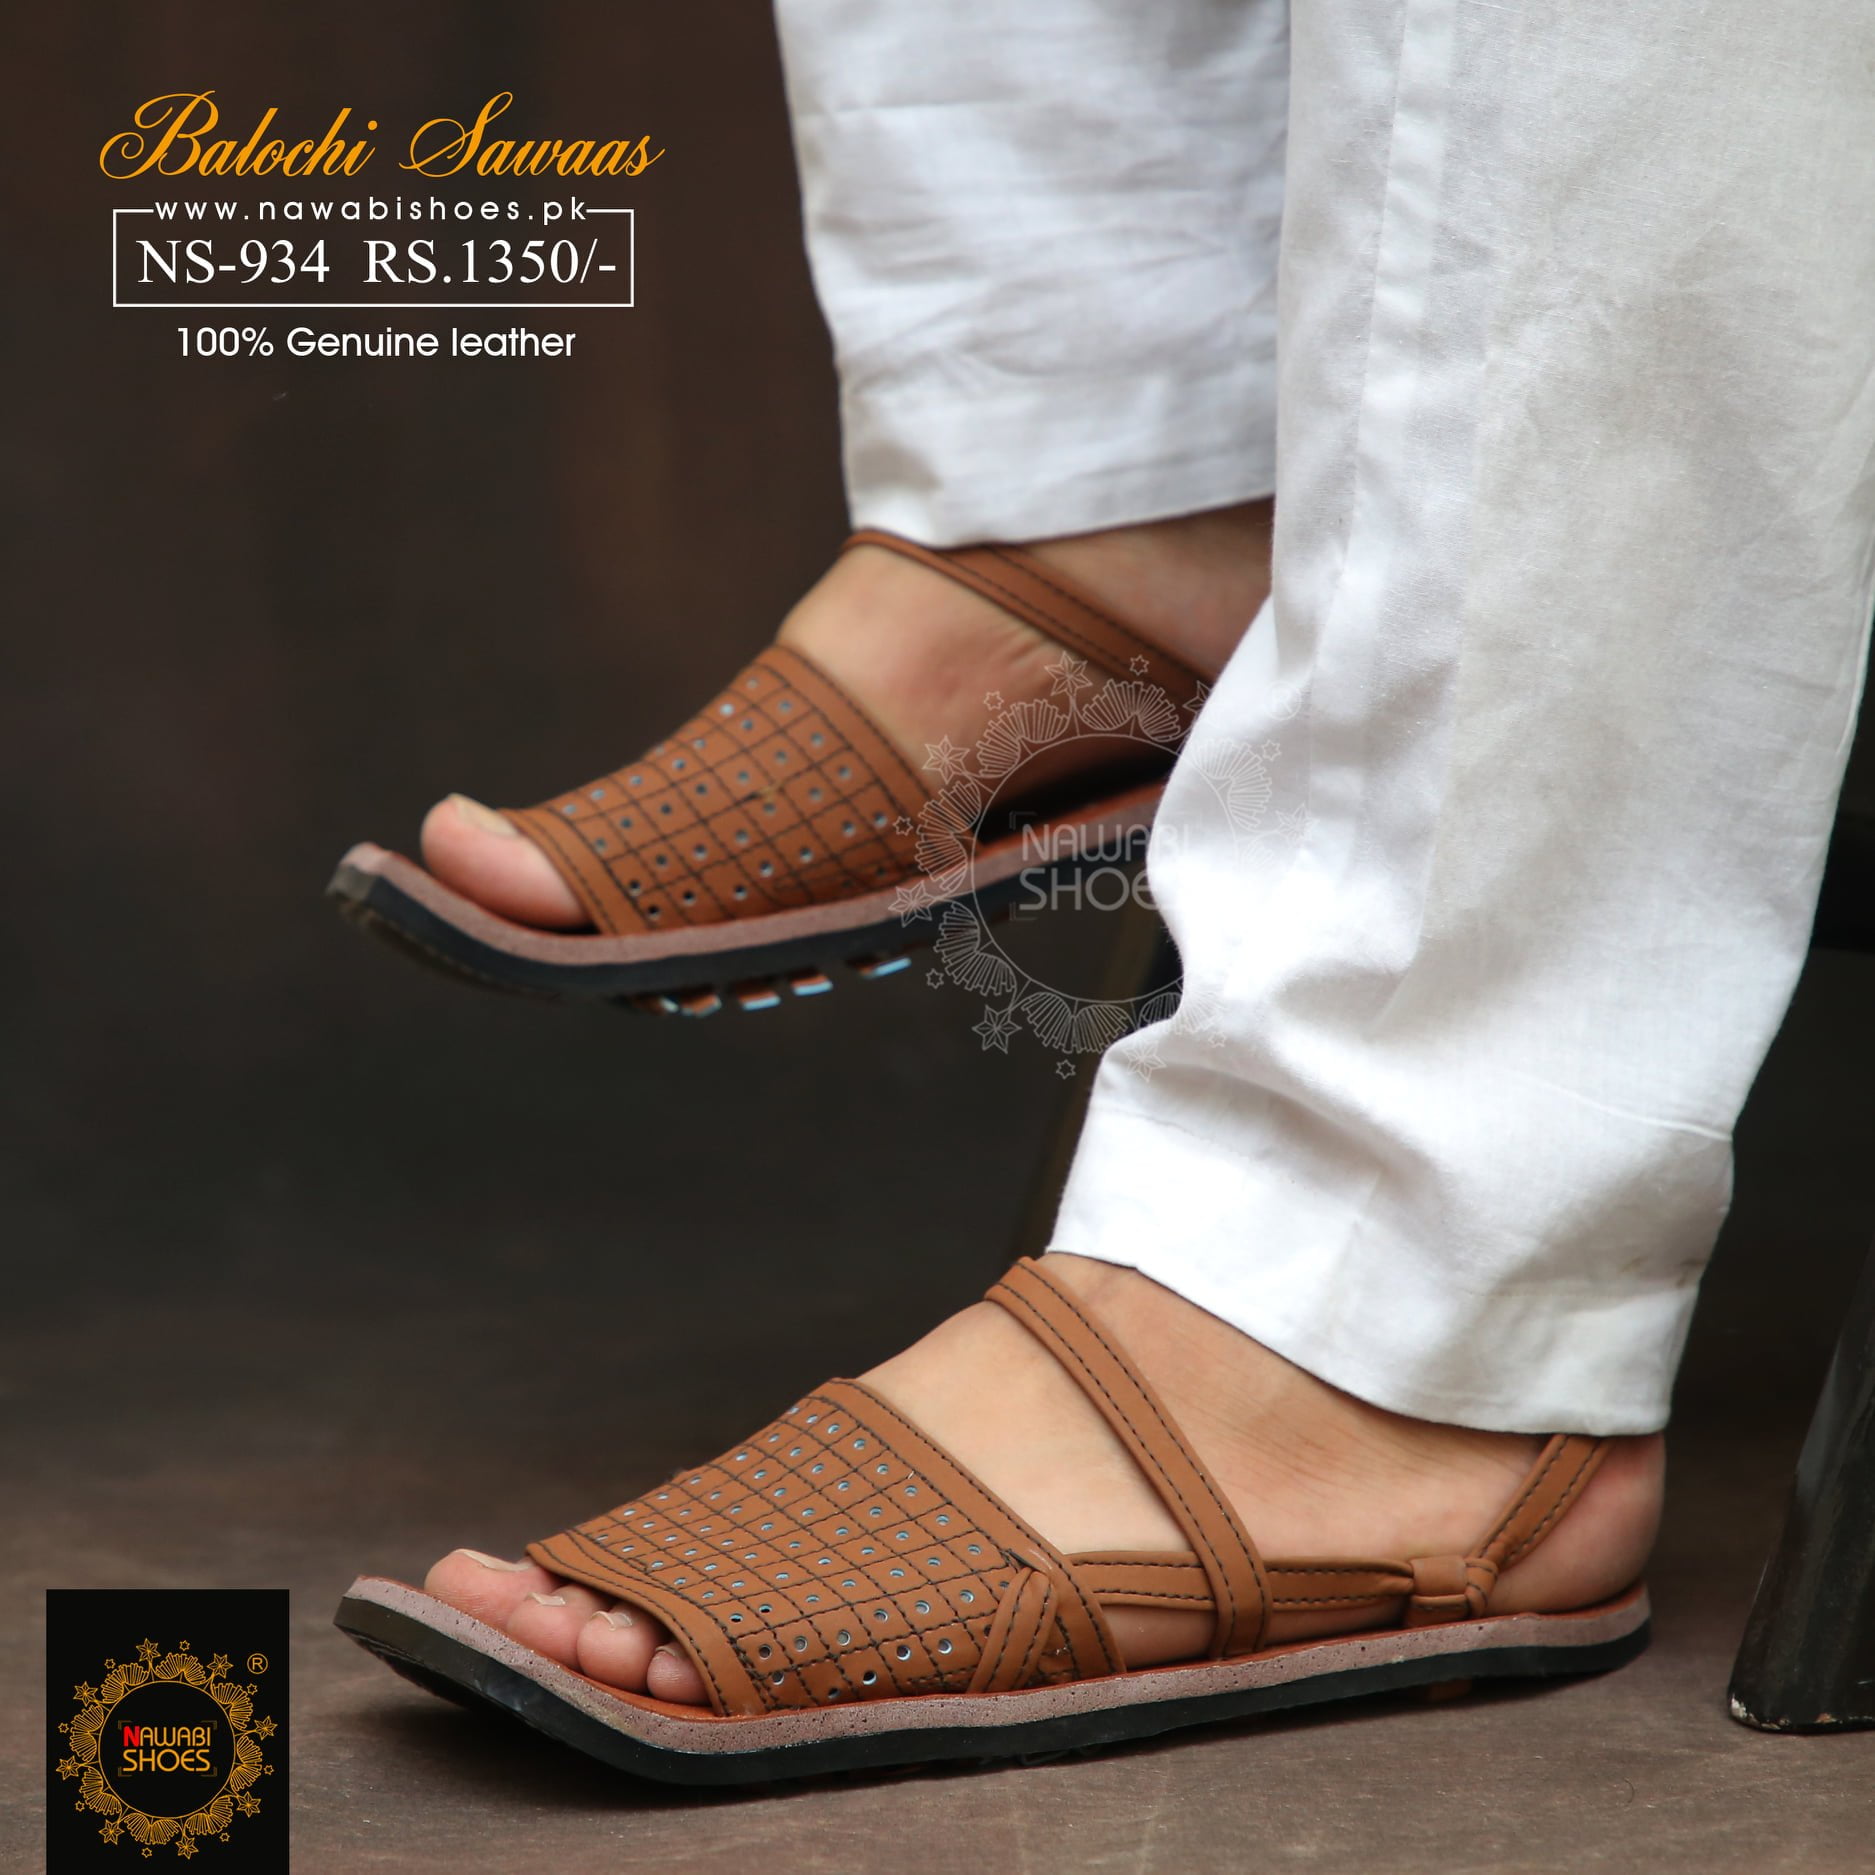 Balochi Chappal/Sandal - Genuine Leather - Brown Black